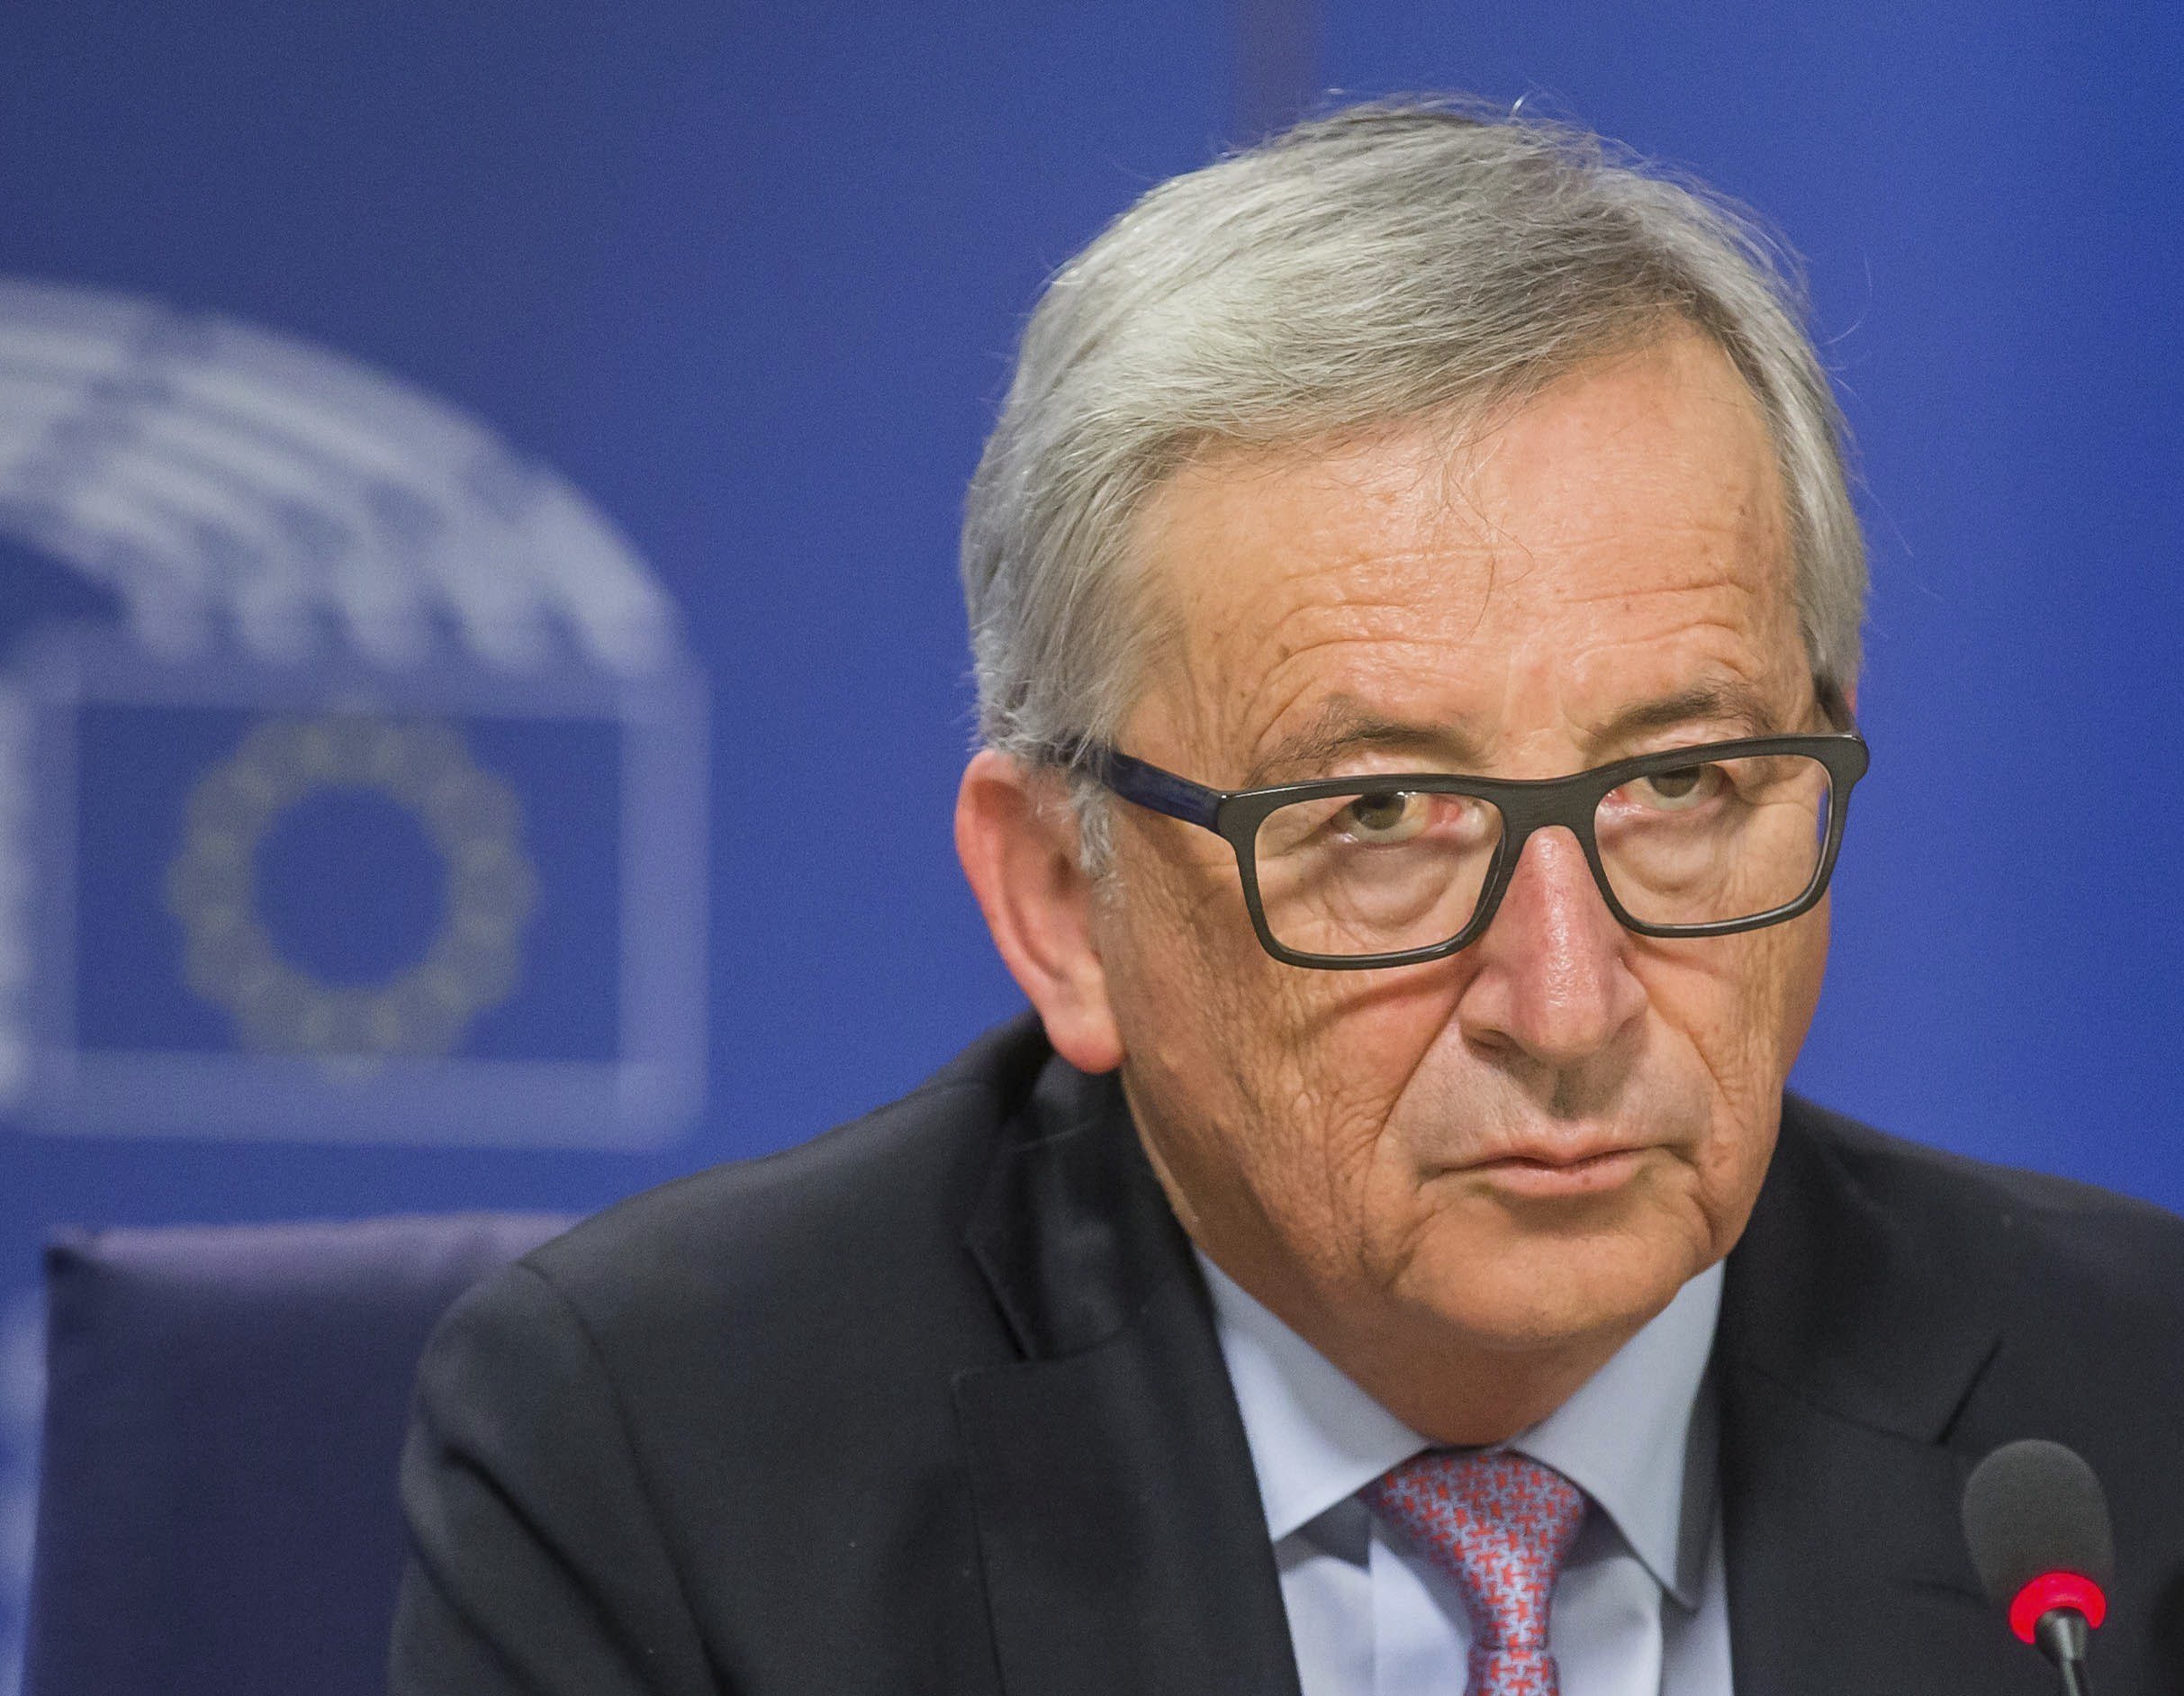 Jean-Claude Juncker: EU will respect the result of the Catalan referendum